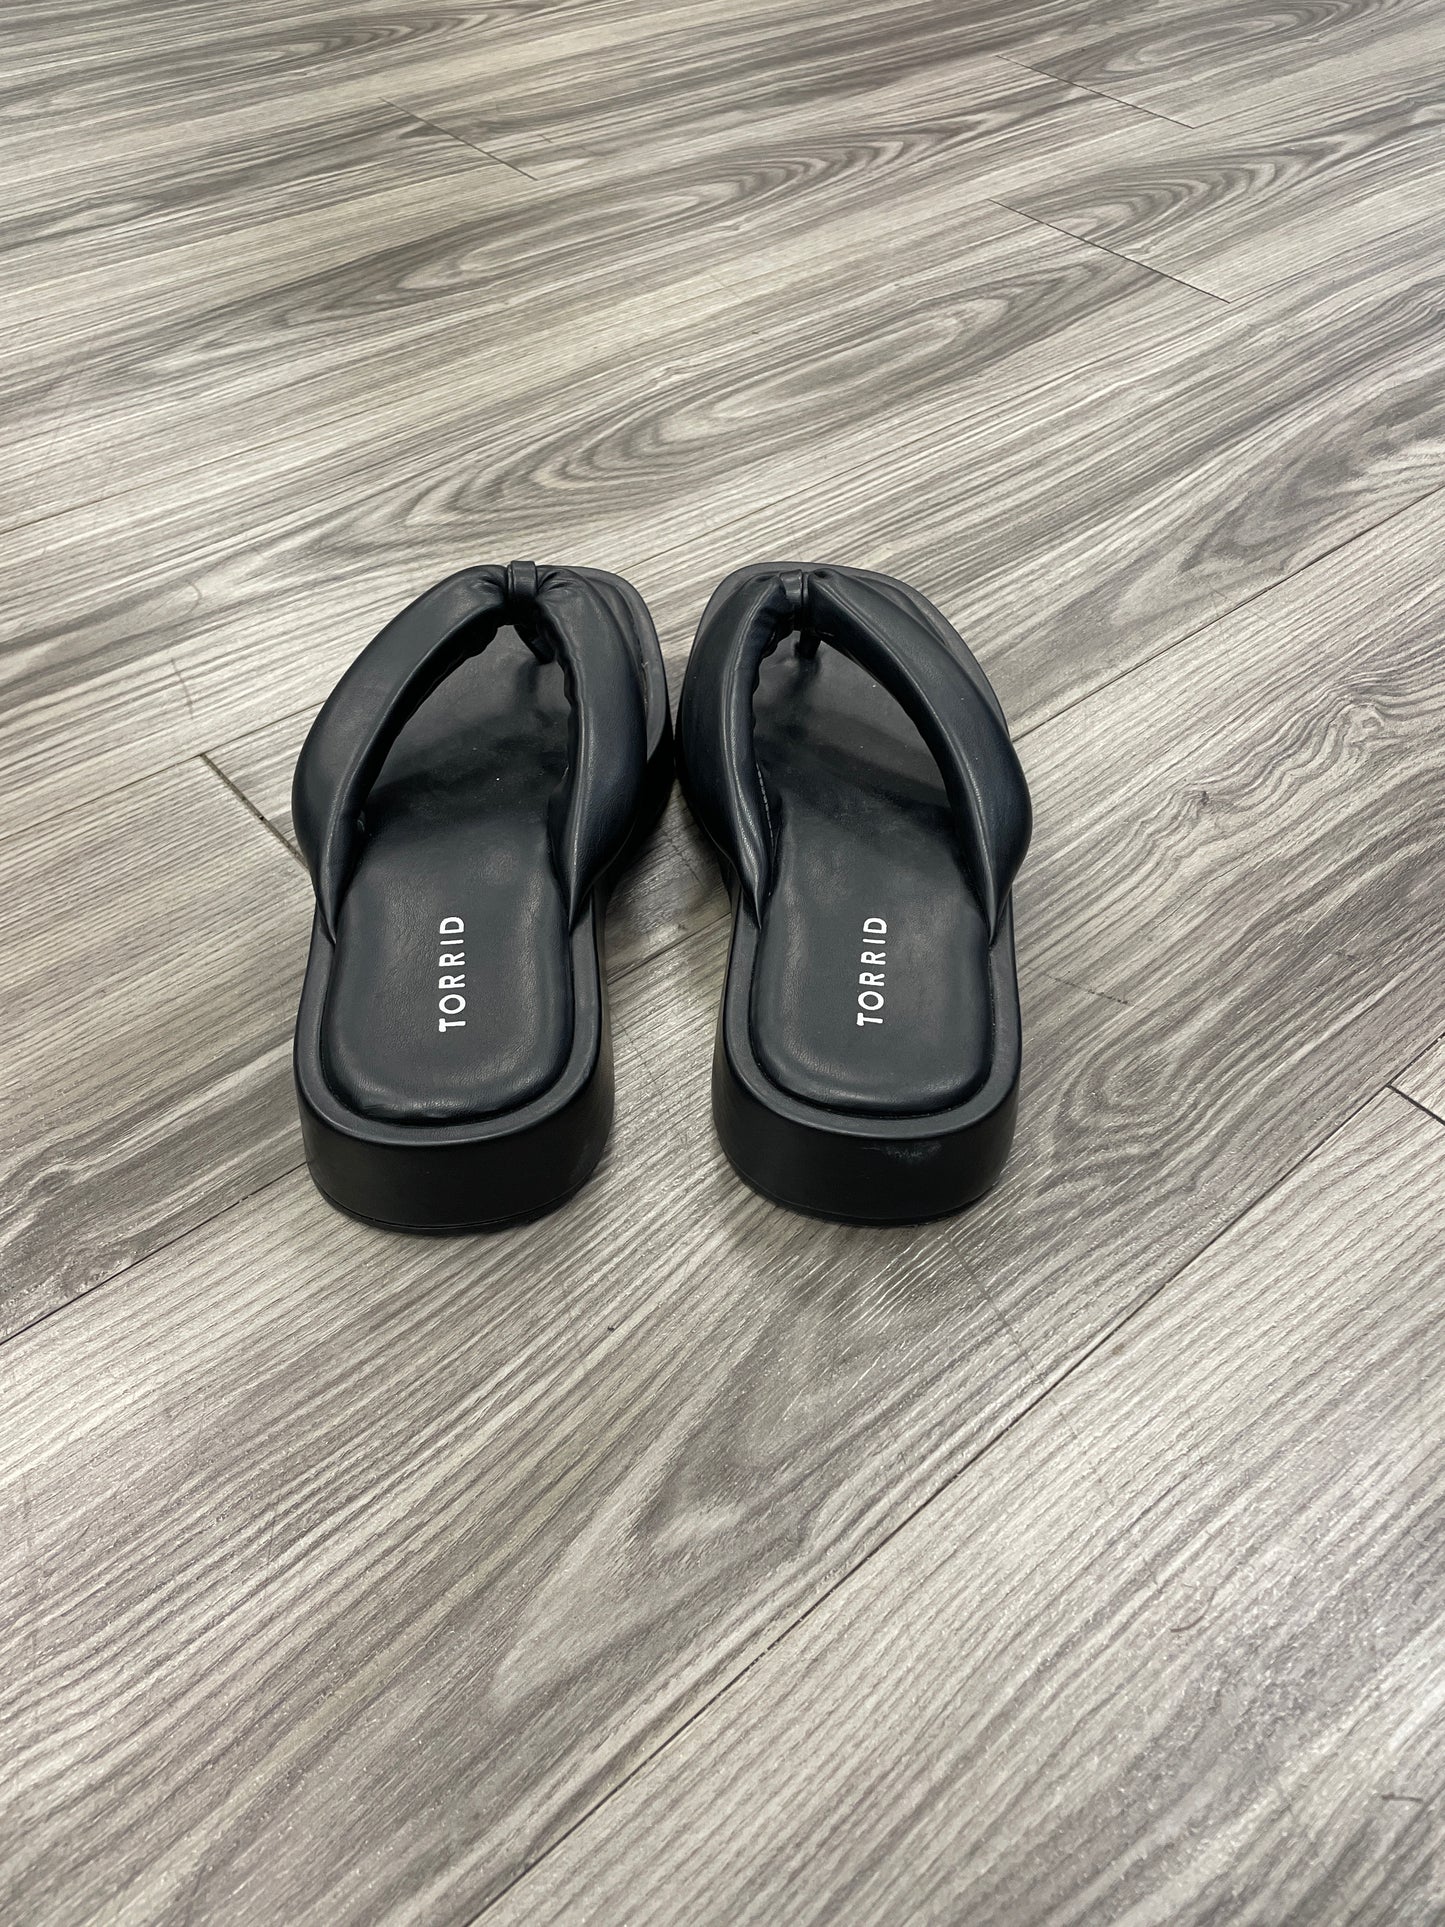 Sandals Flip Flops By Torrid  Size: 7.5